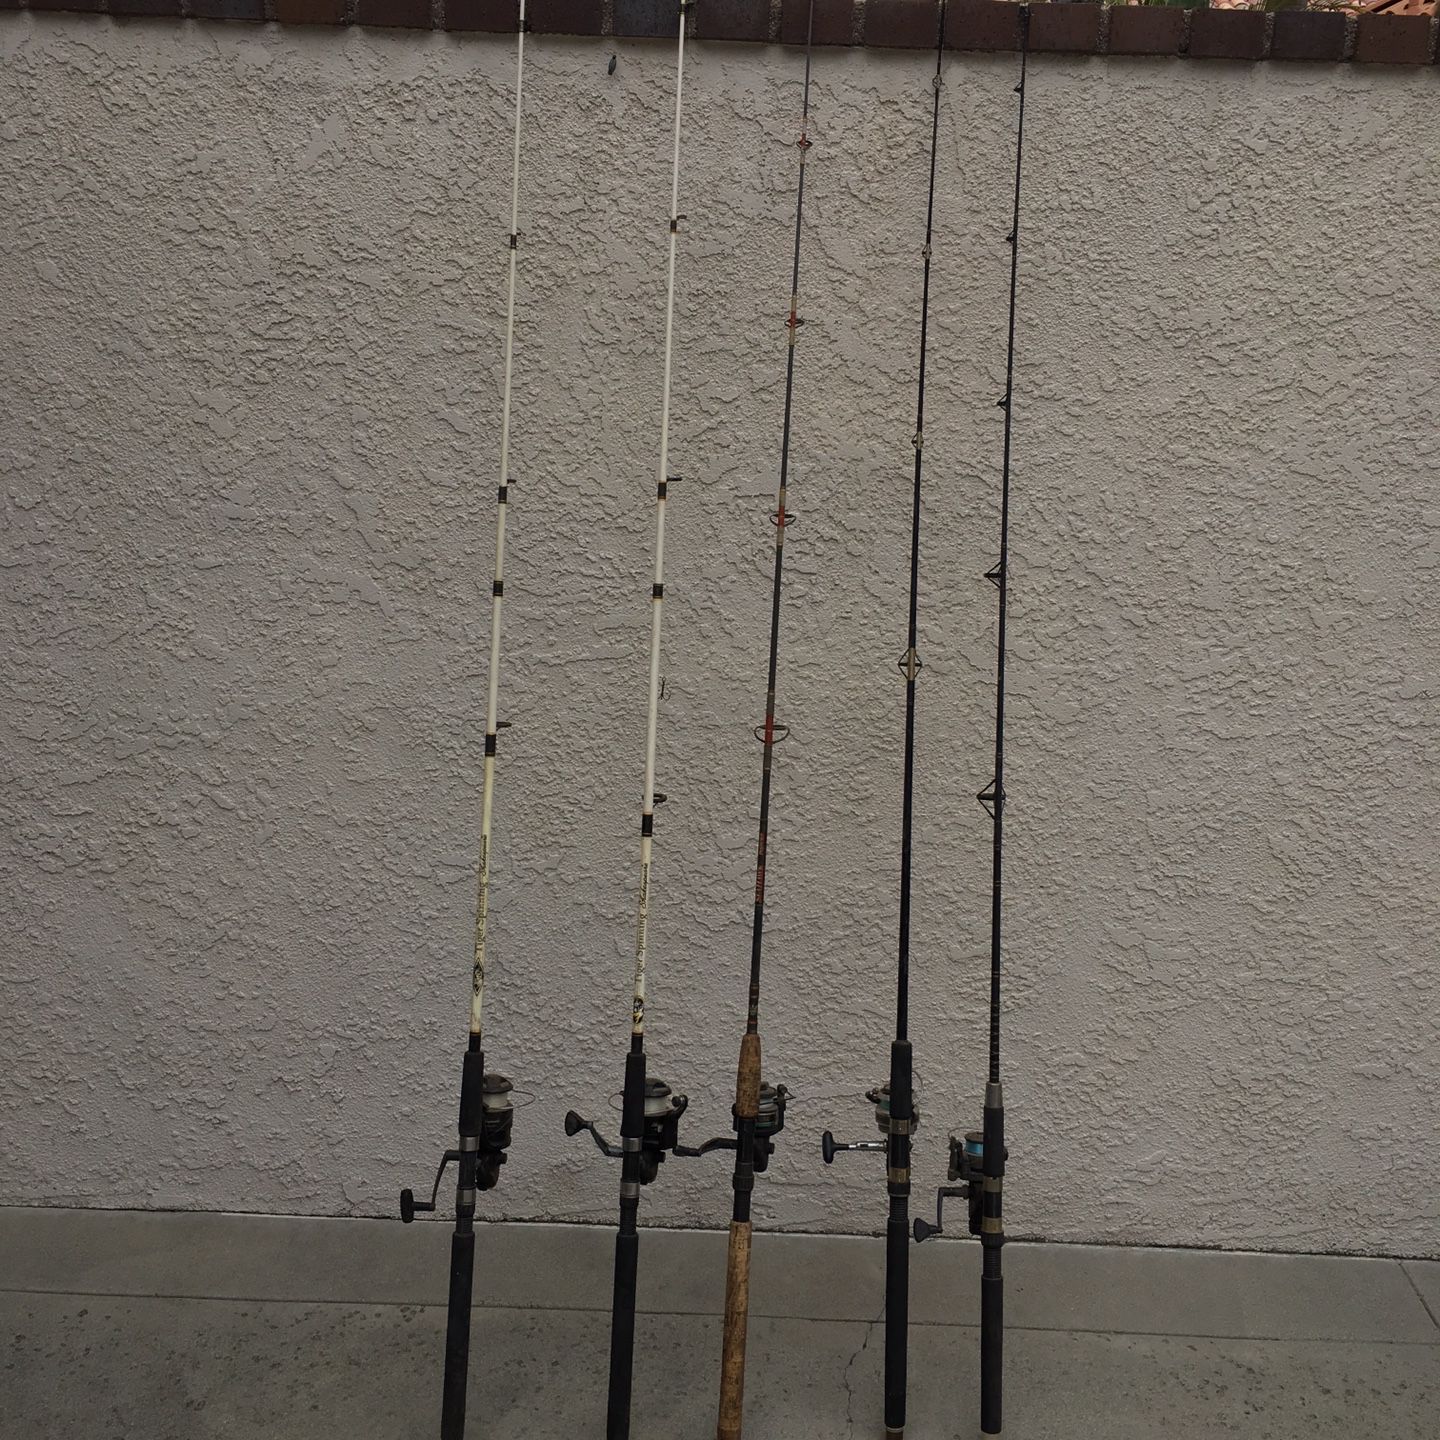 Fishing poles, medium duty including reels, 6 foot and 7 foot, $20